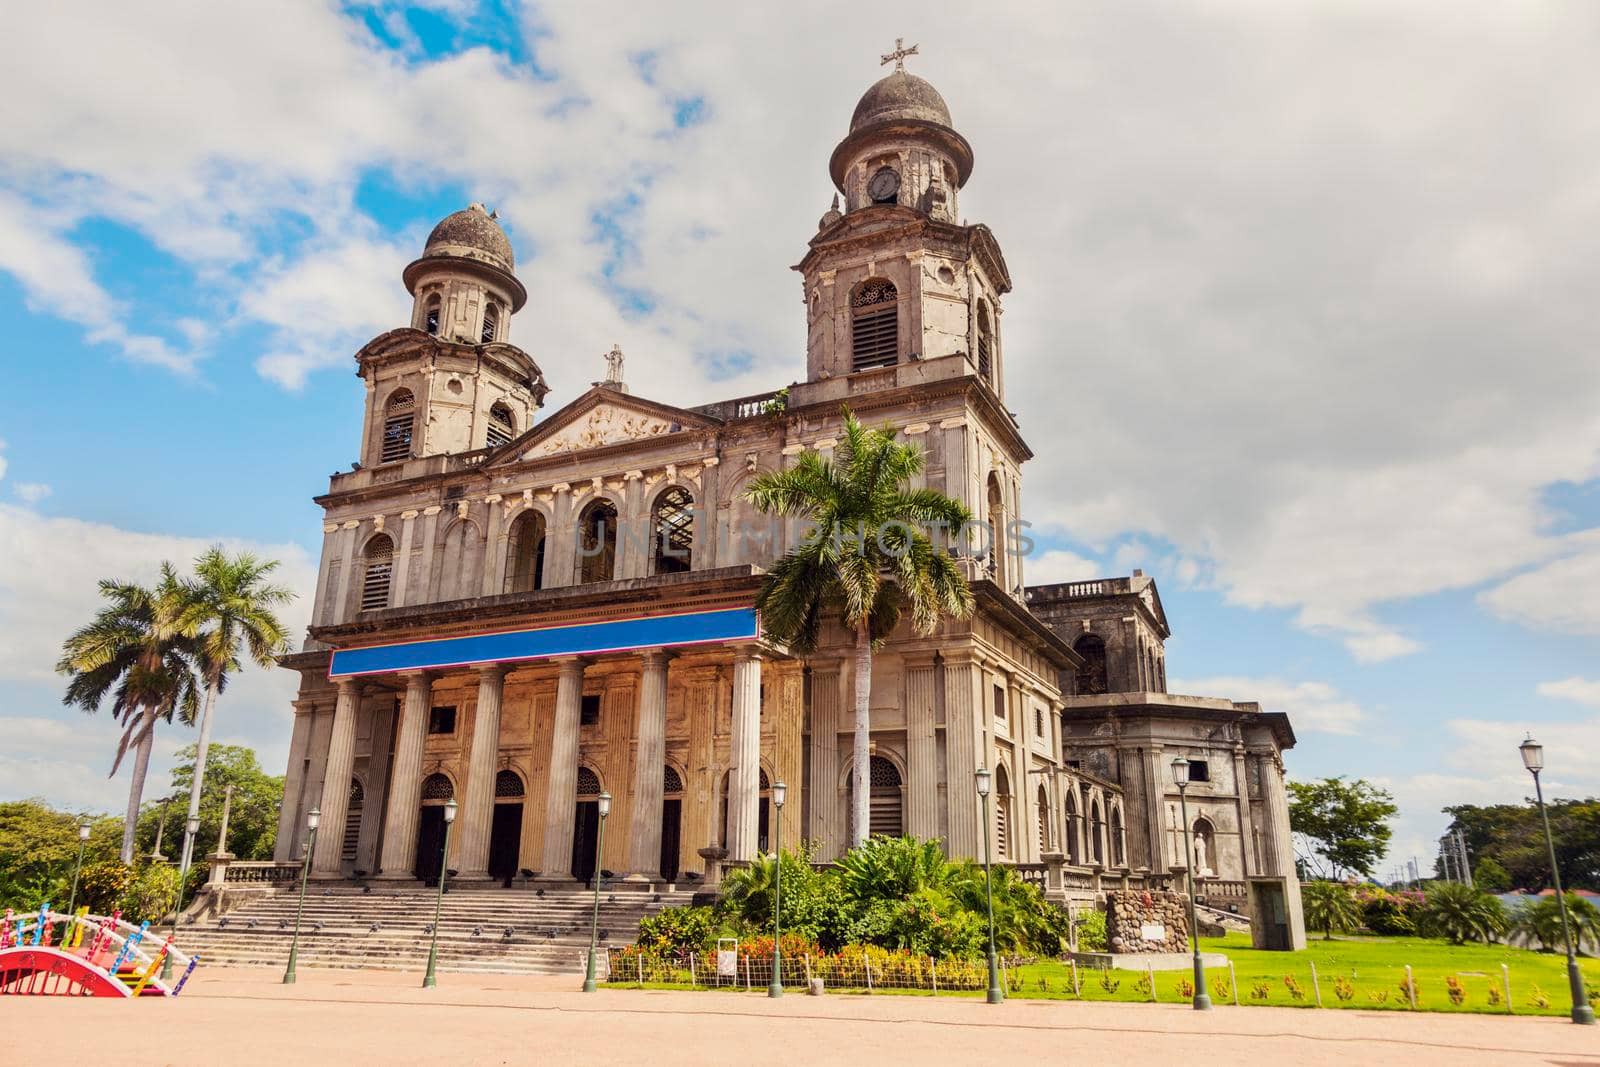 Old Cathedral of Managua. Managua, Nicaragua.